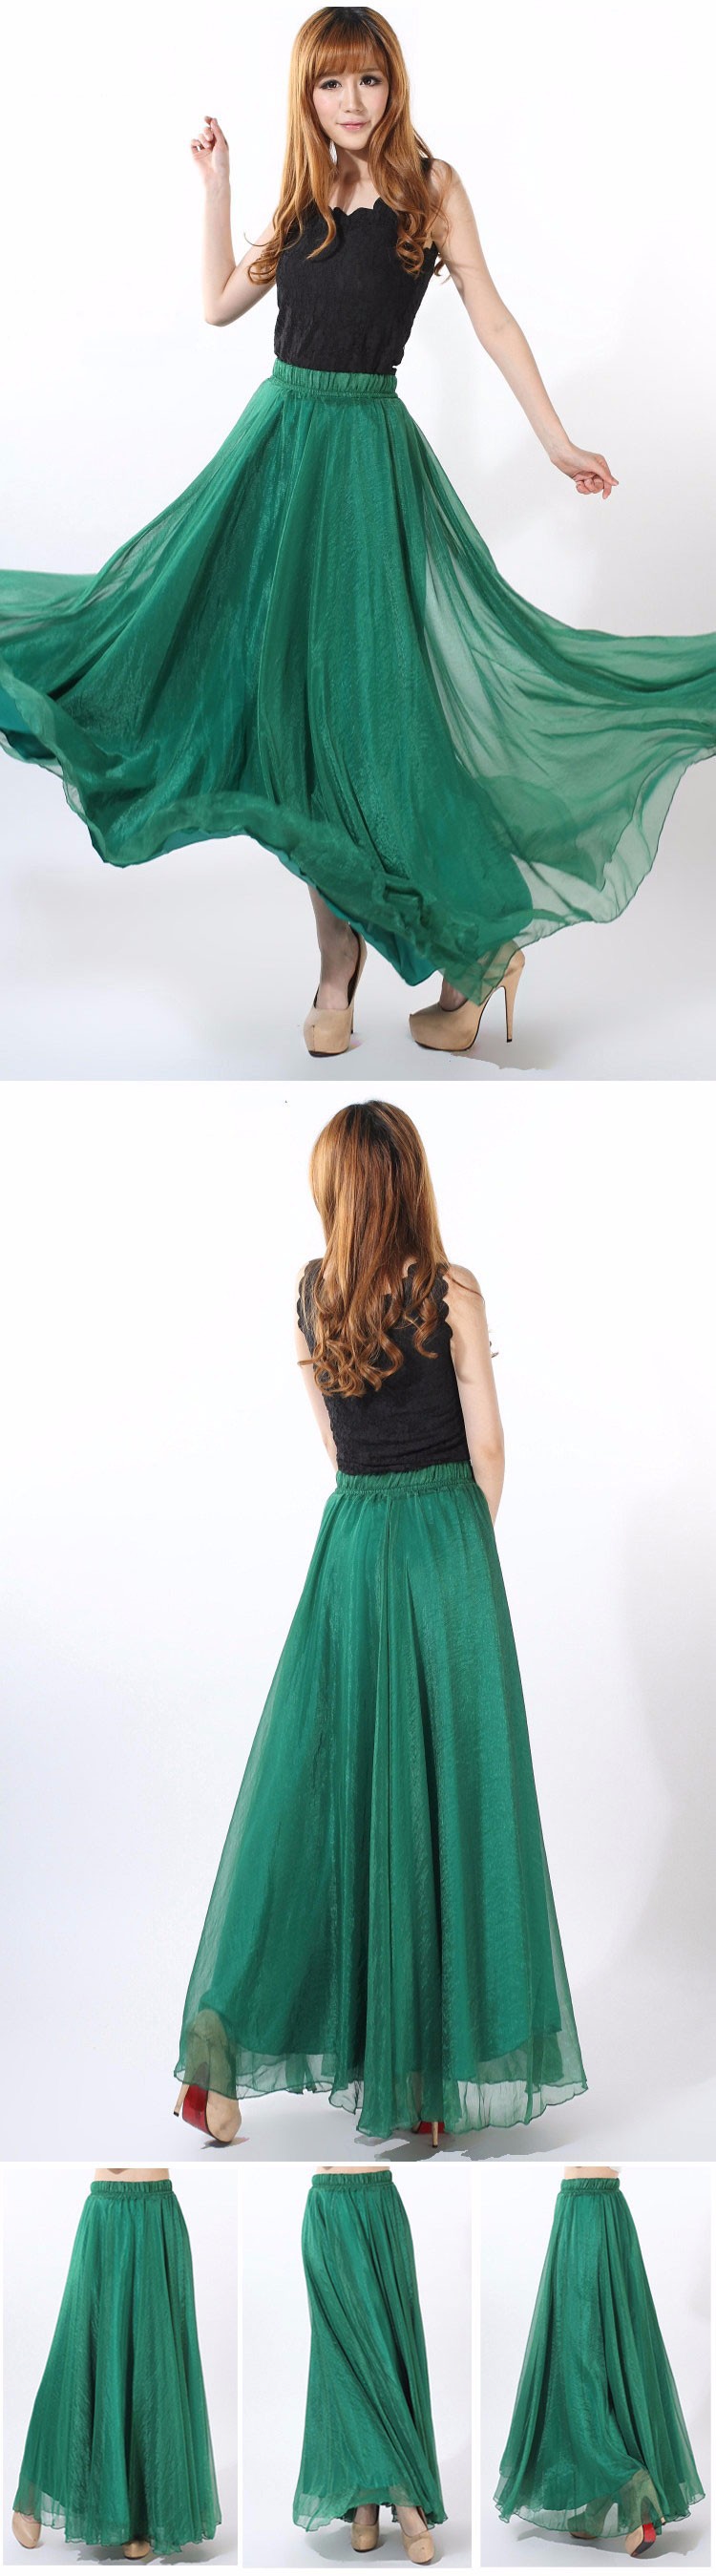 skirts (8)